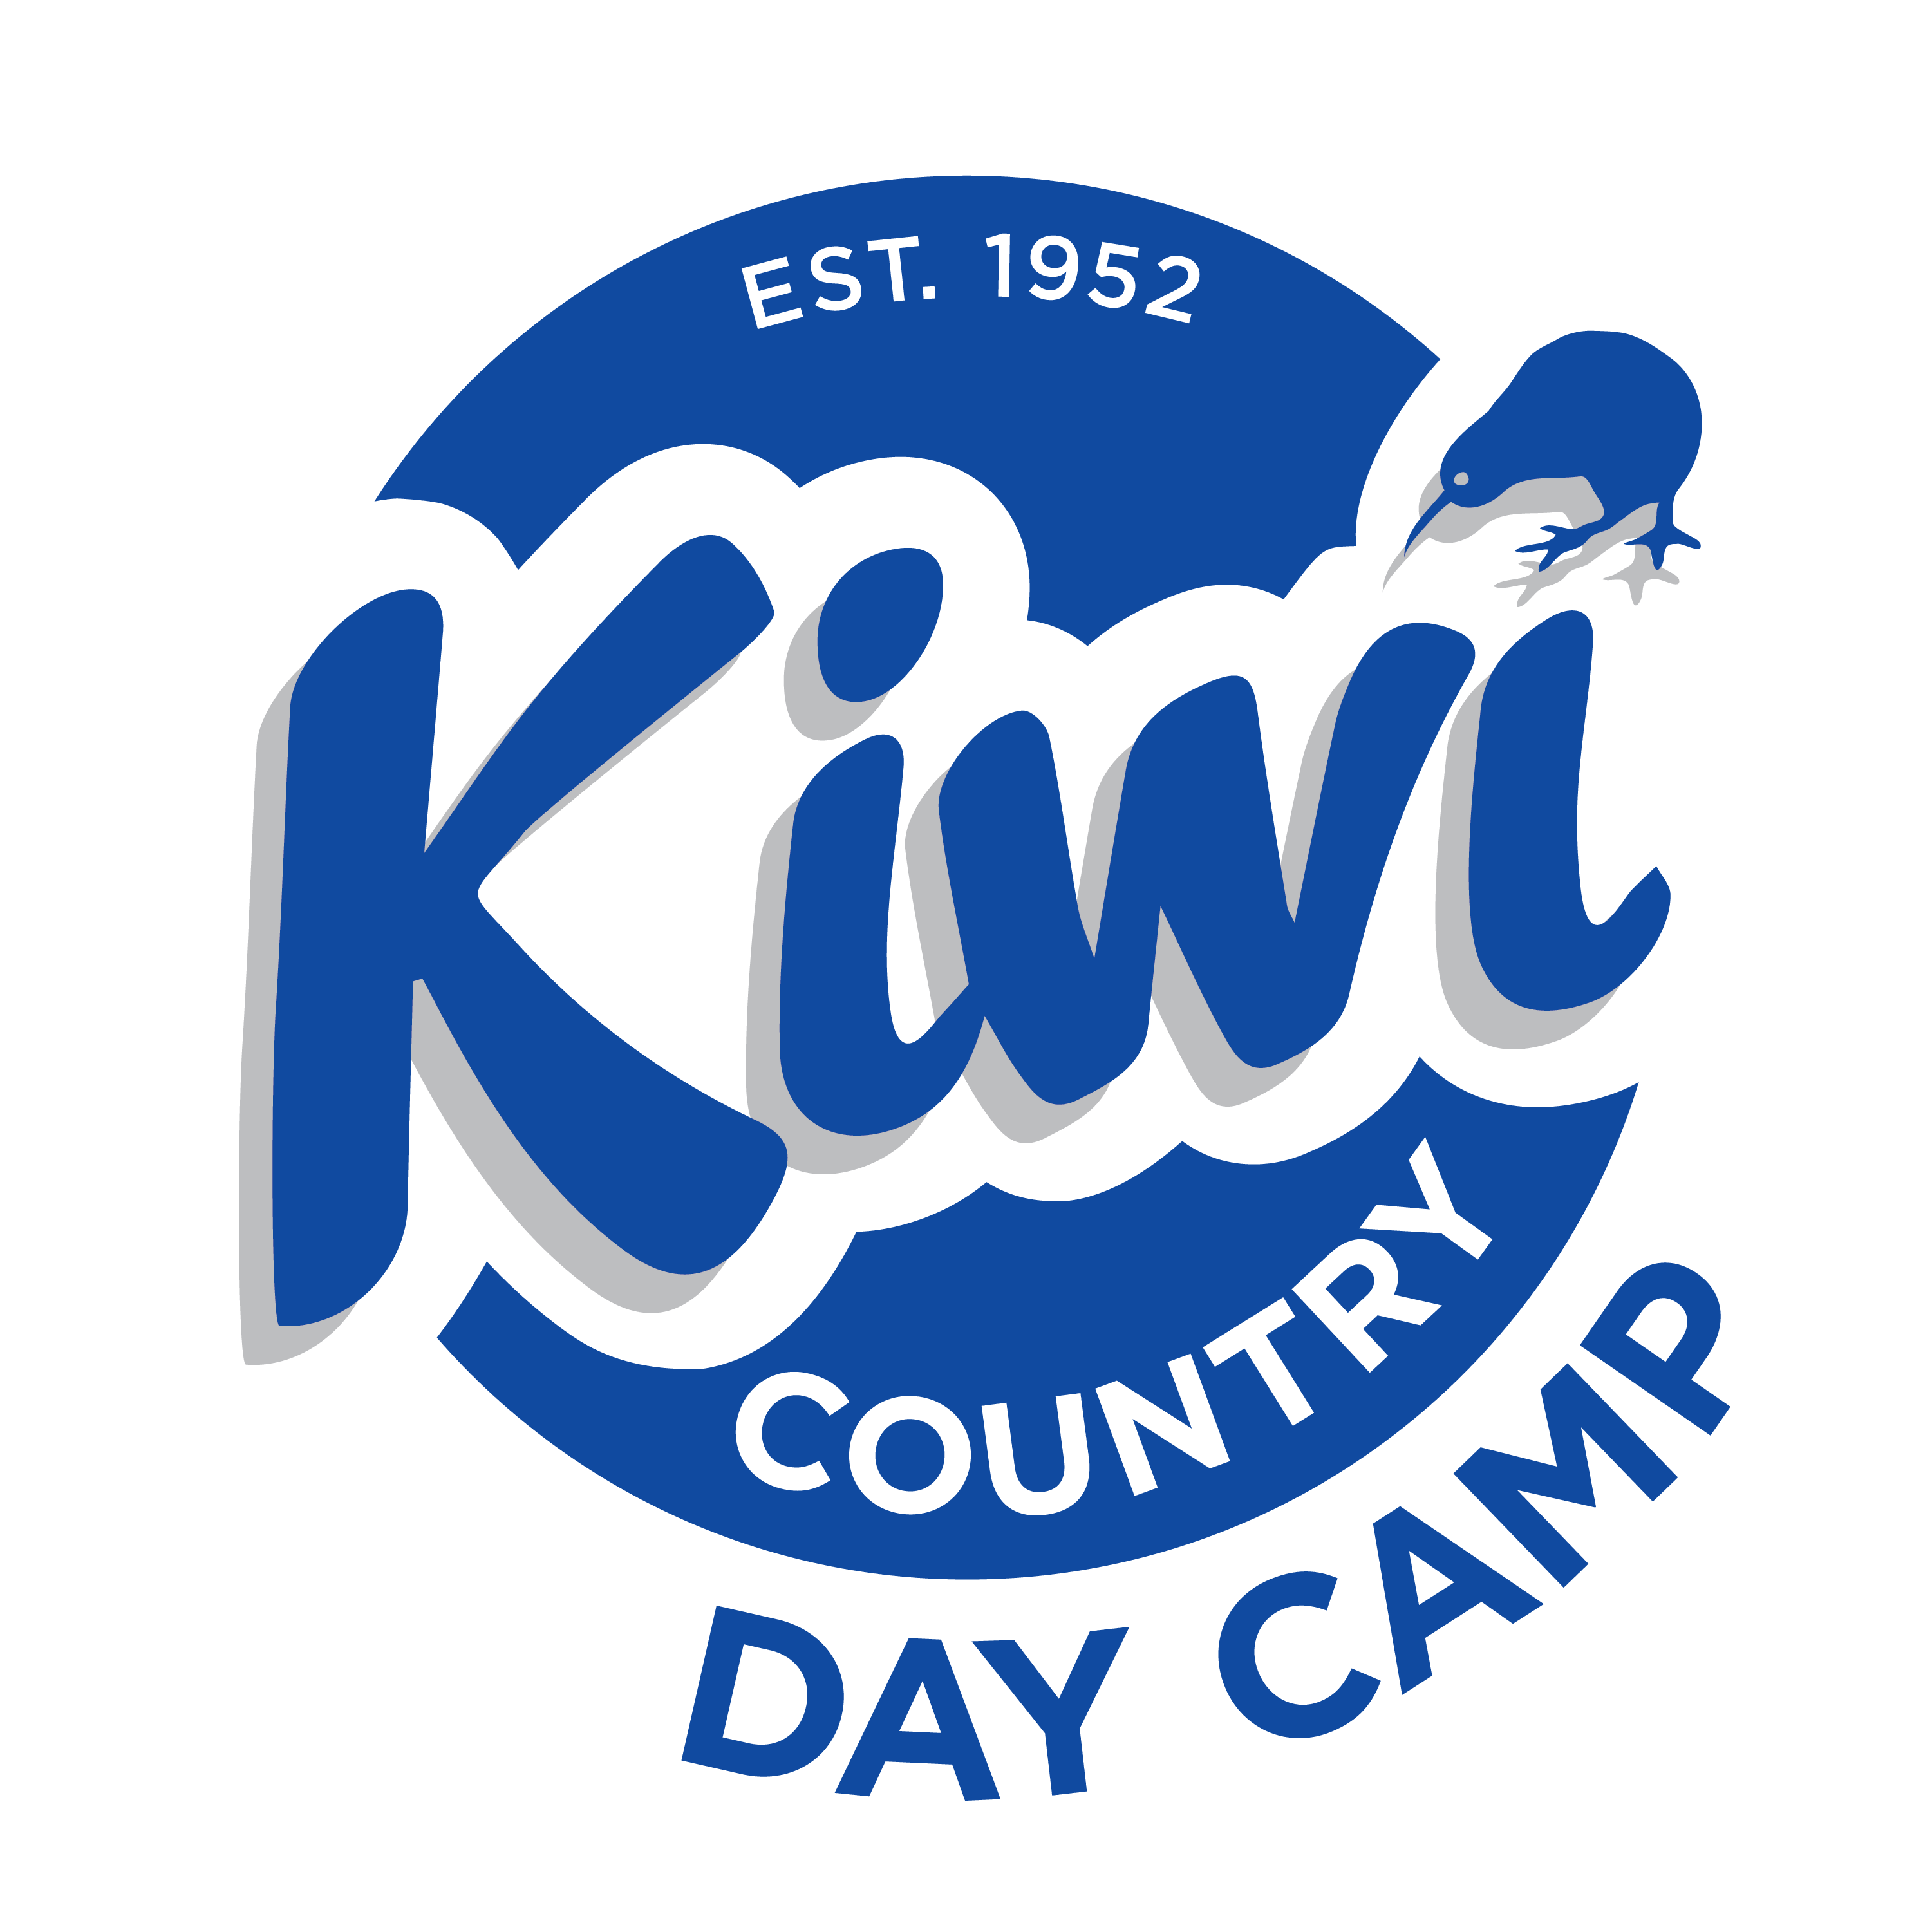 B. Campamento Kiwi (Nivel 3)